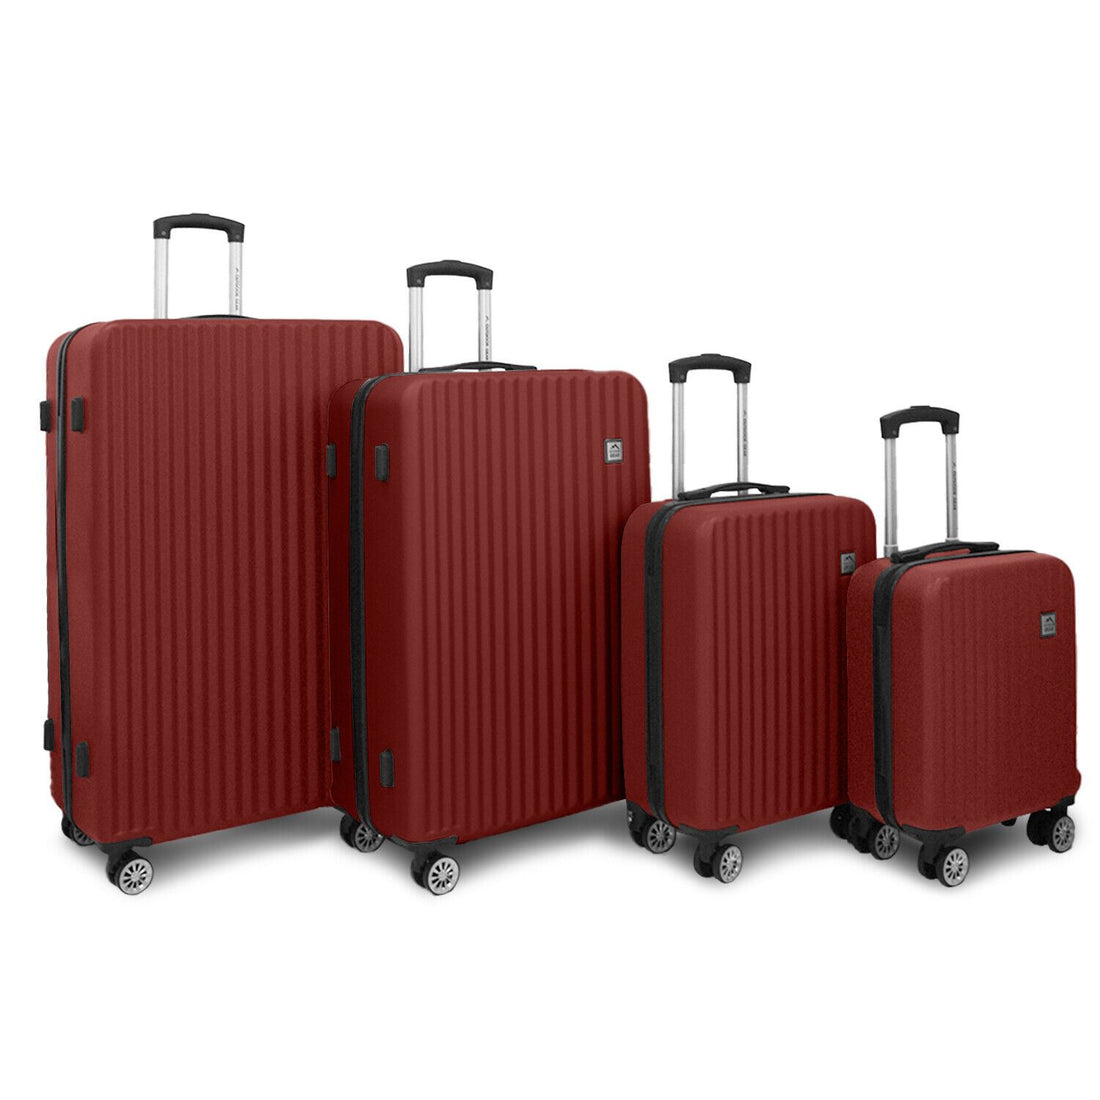 Hard Shell Burgundy Classic Suitcase 8 Wheel Luggage Bag